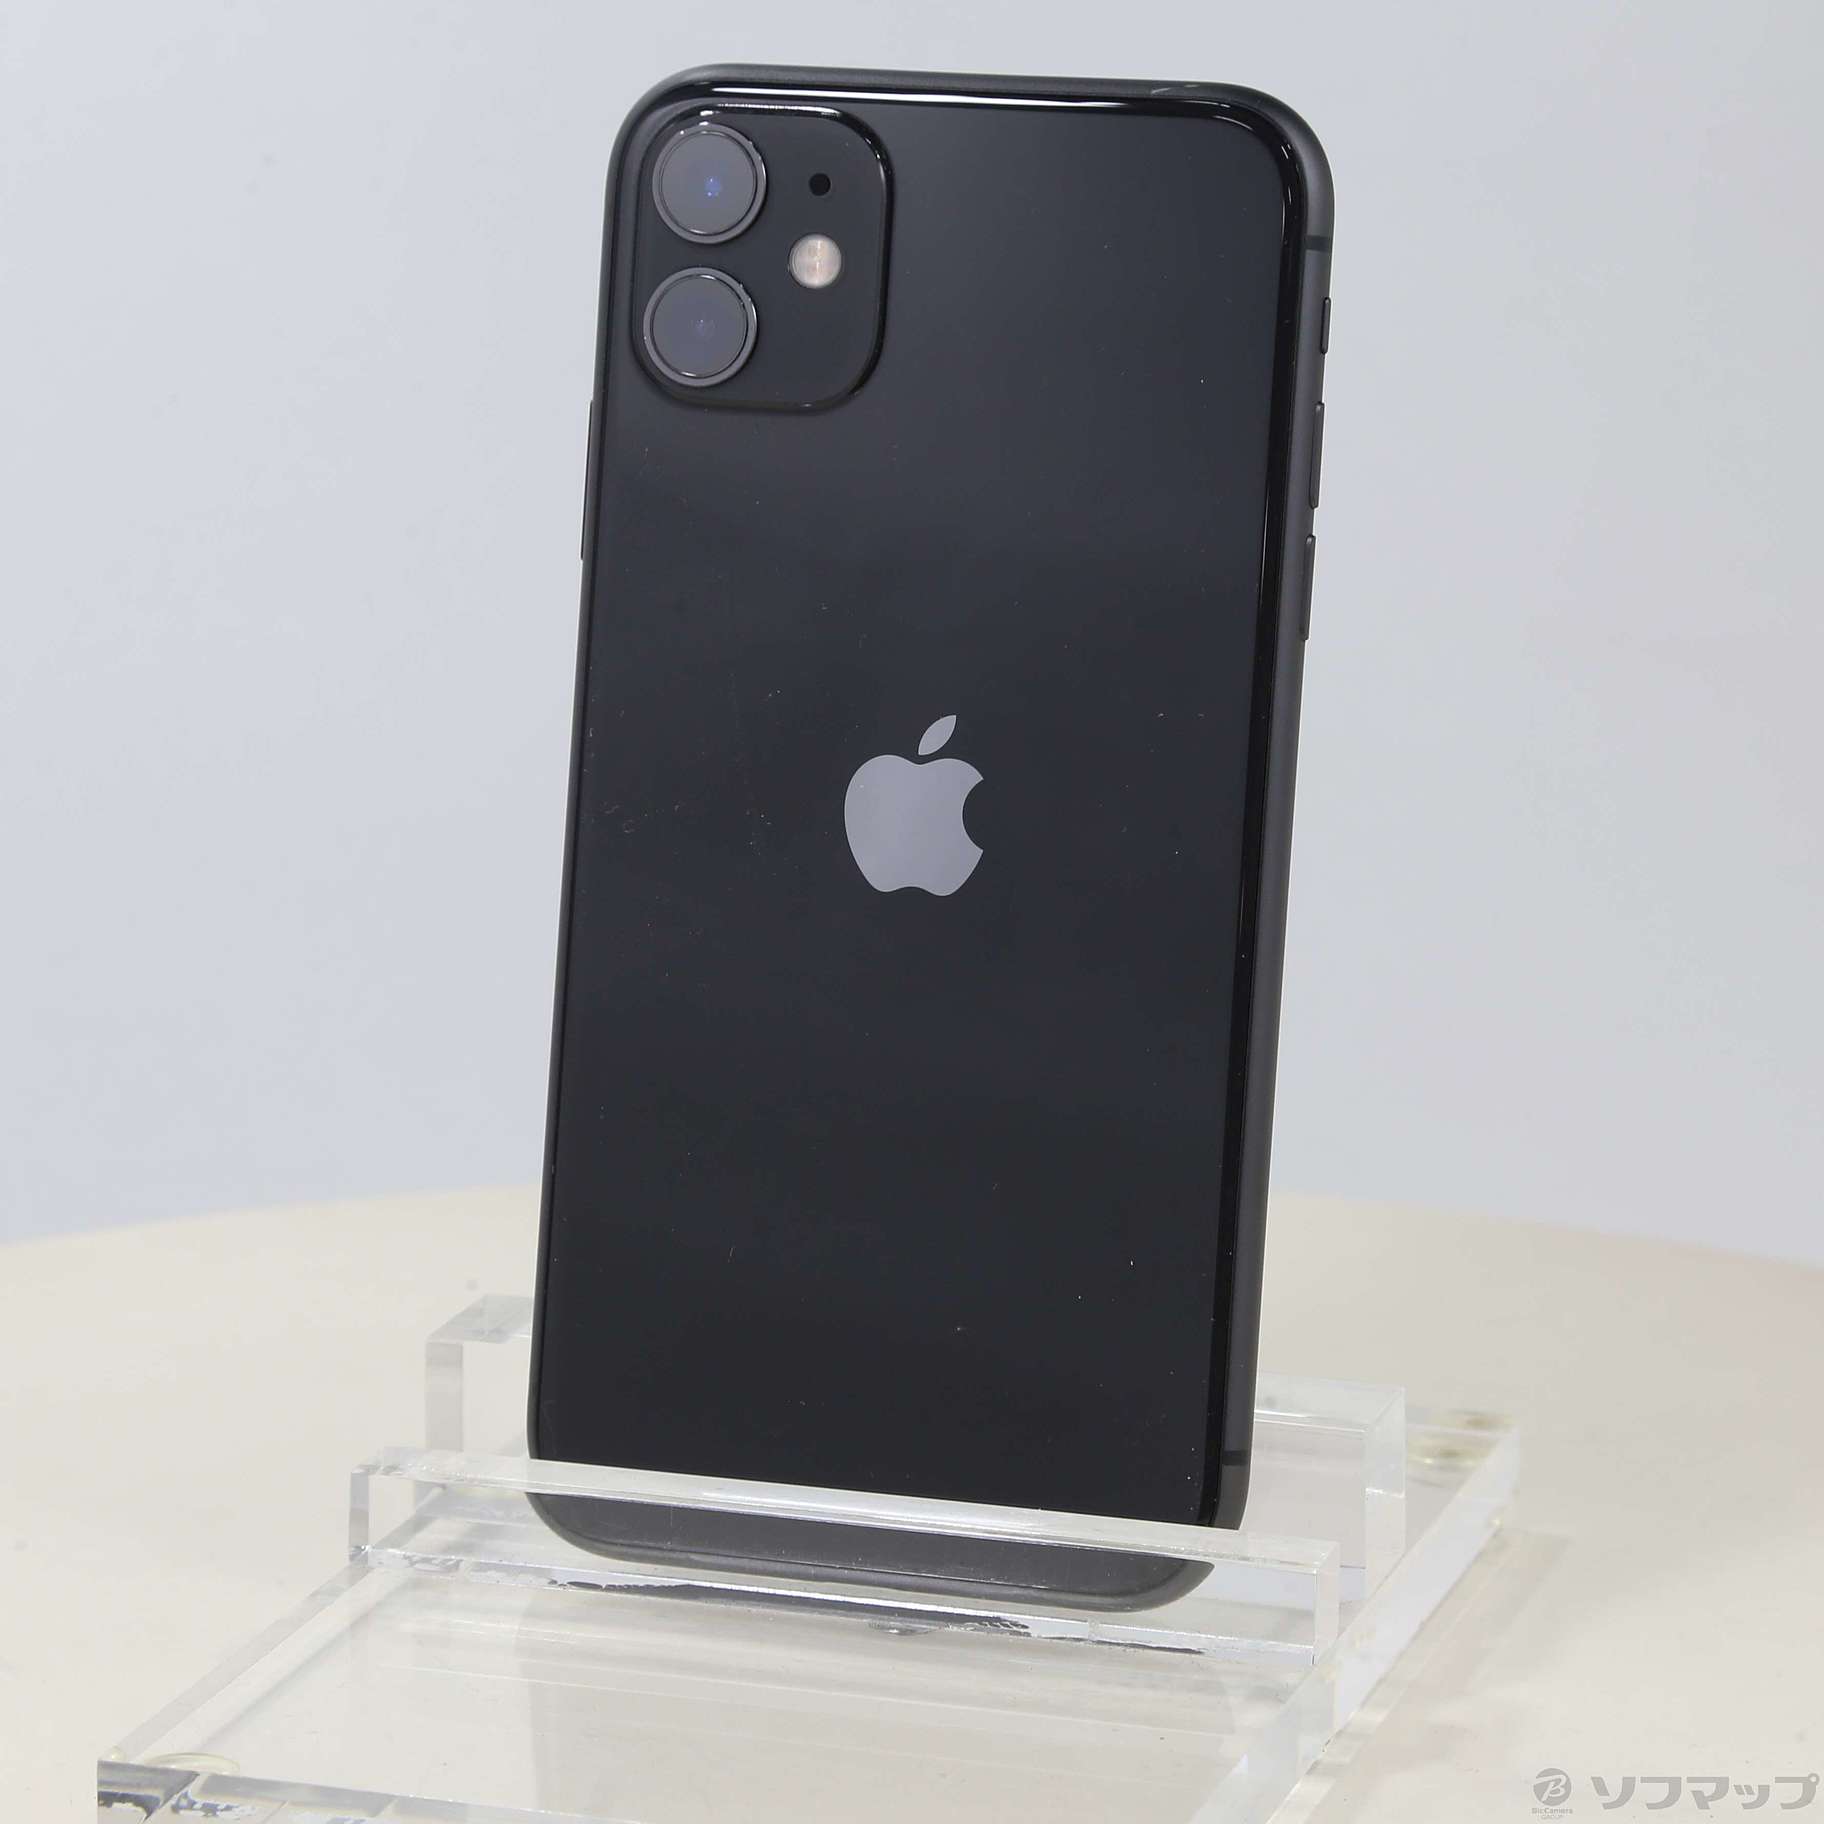 iPhone11 ブラック 64GB - 携帯電話